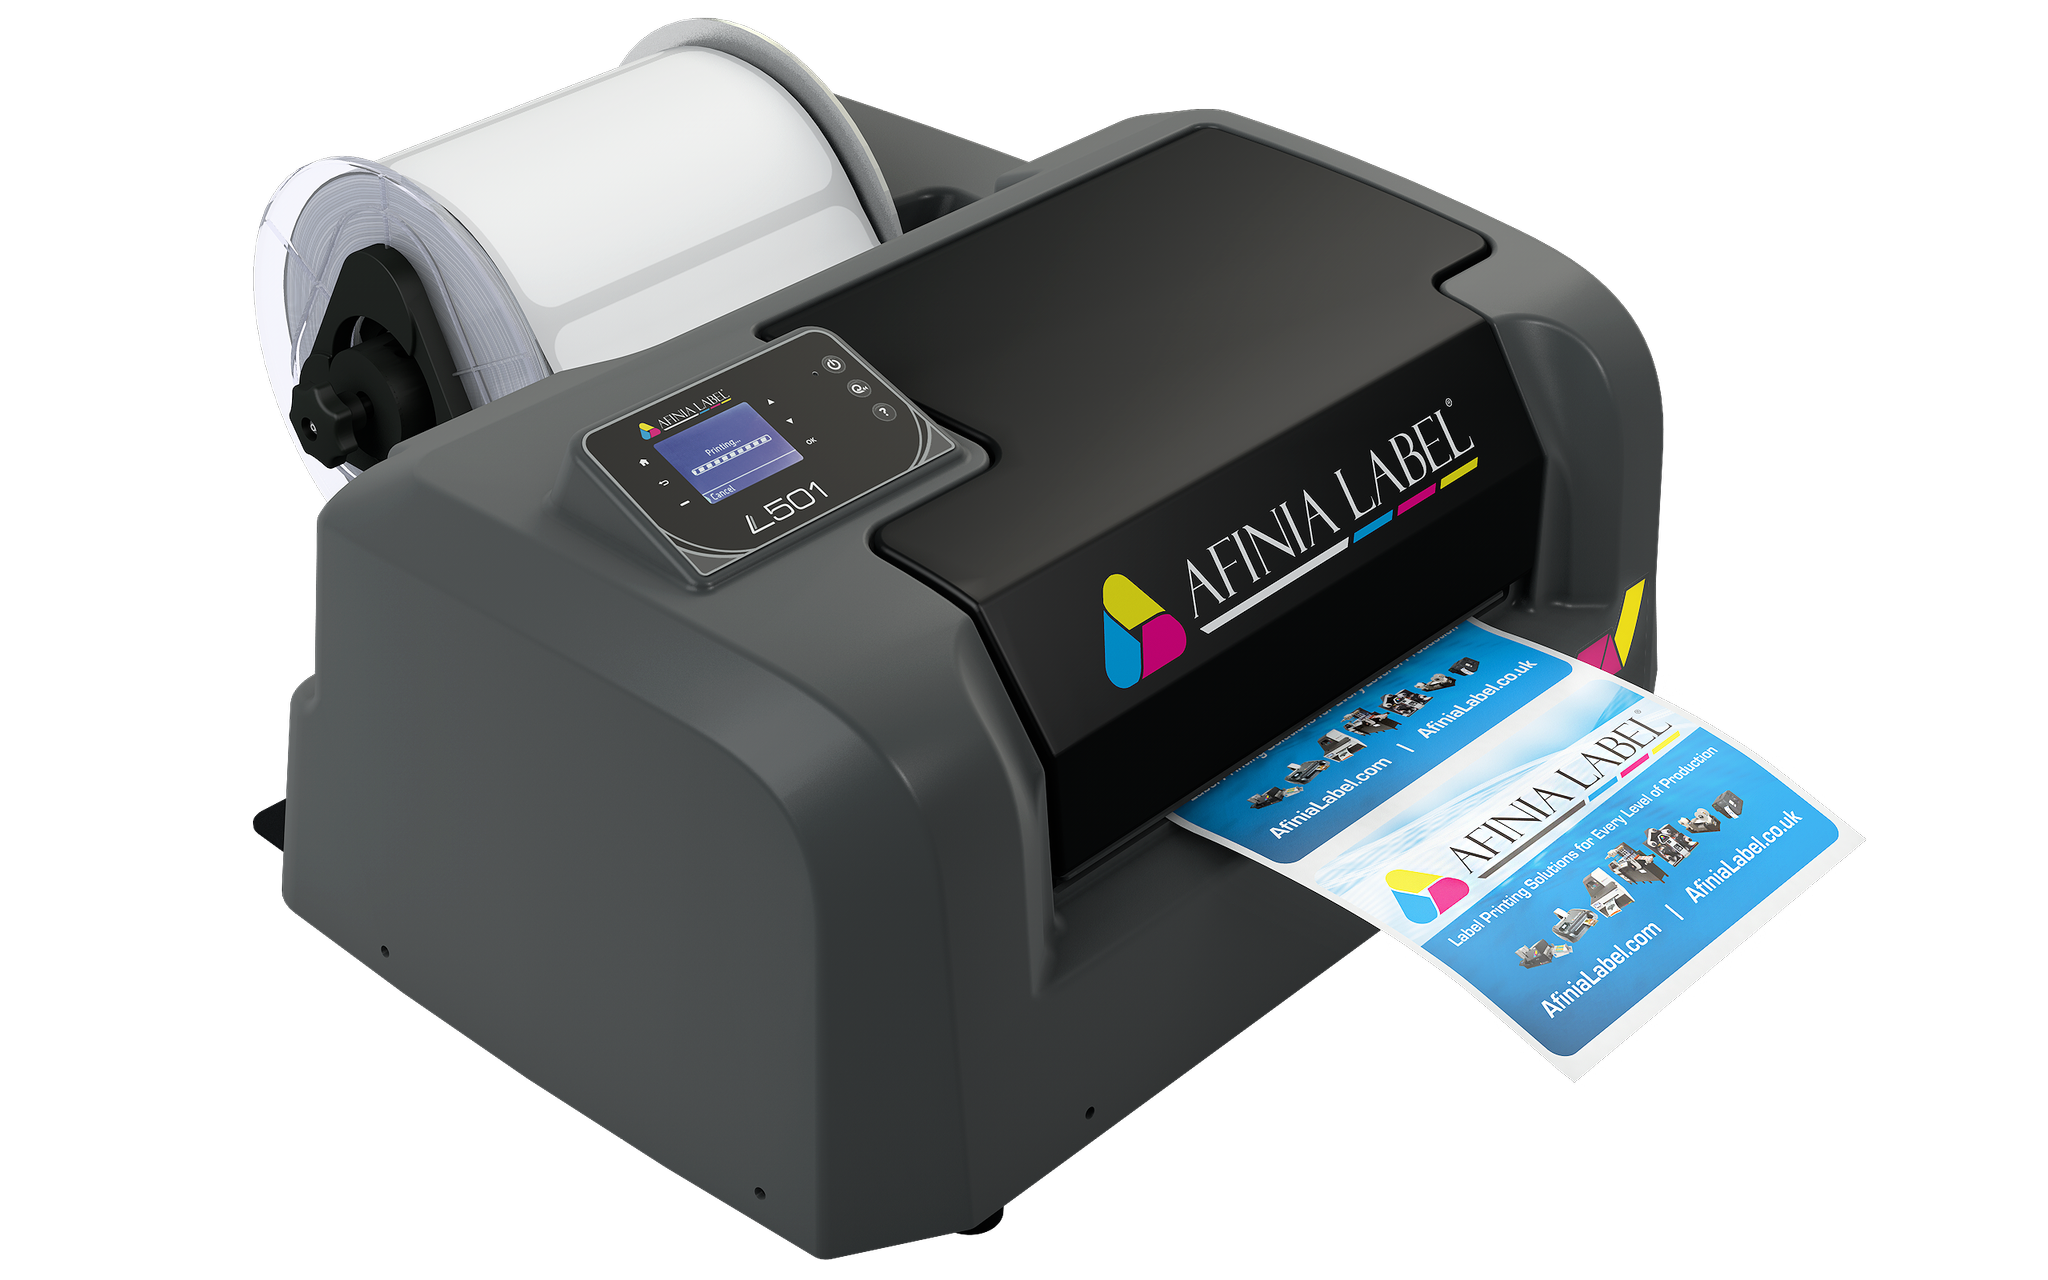 35 Color Label Printer For Small Business Label Design Ideas 2020 5940